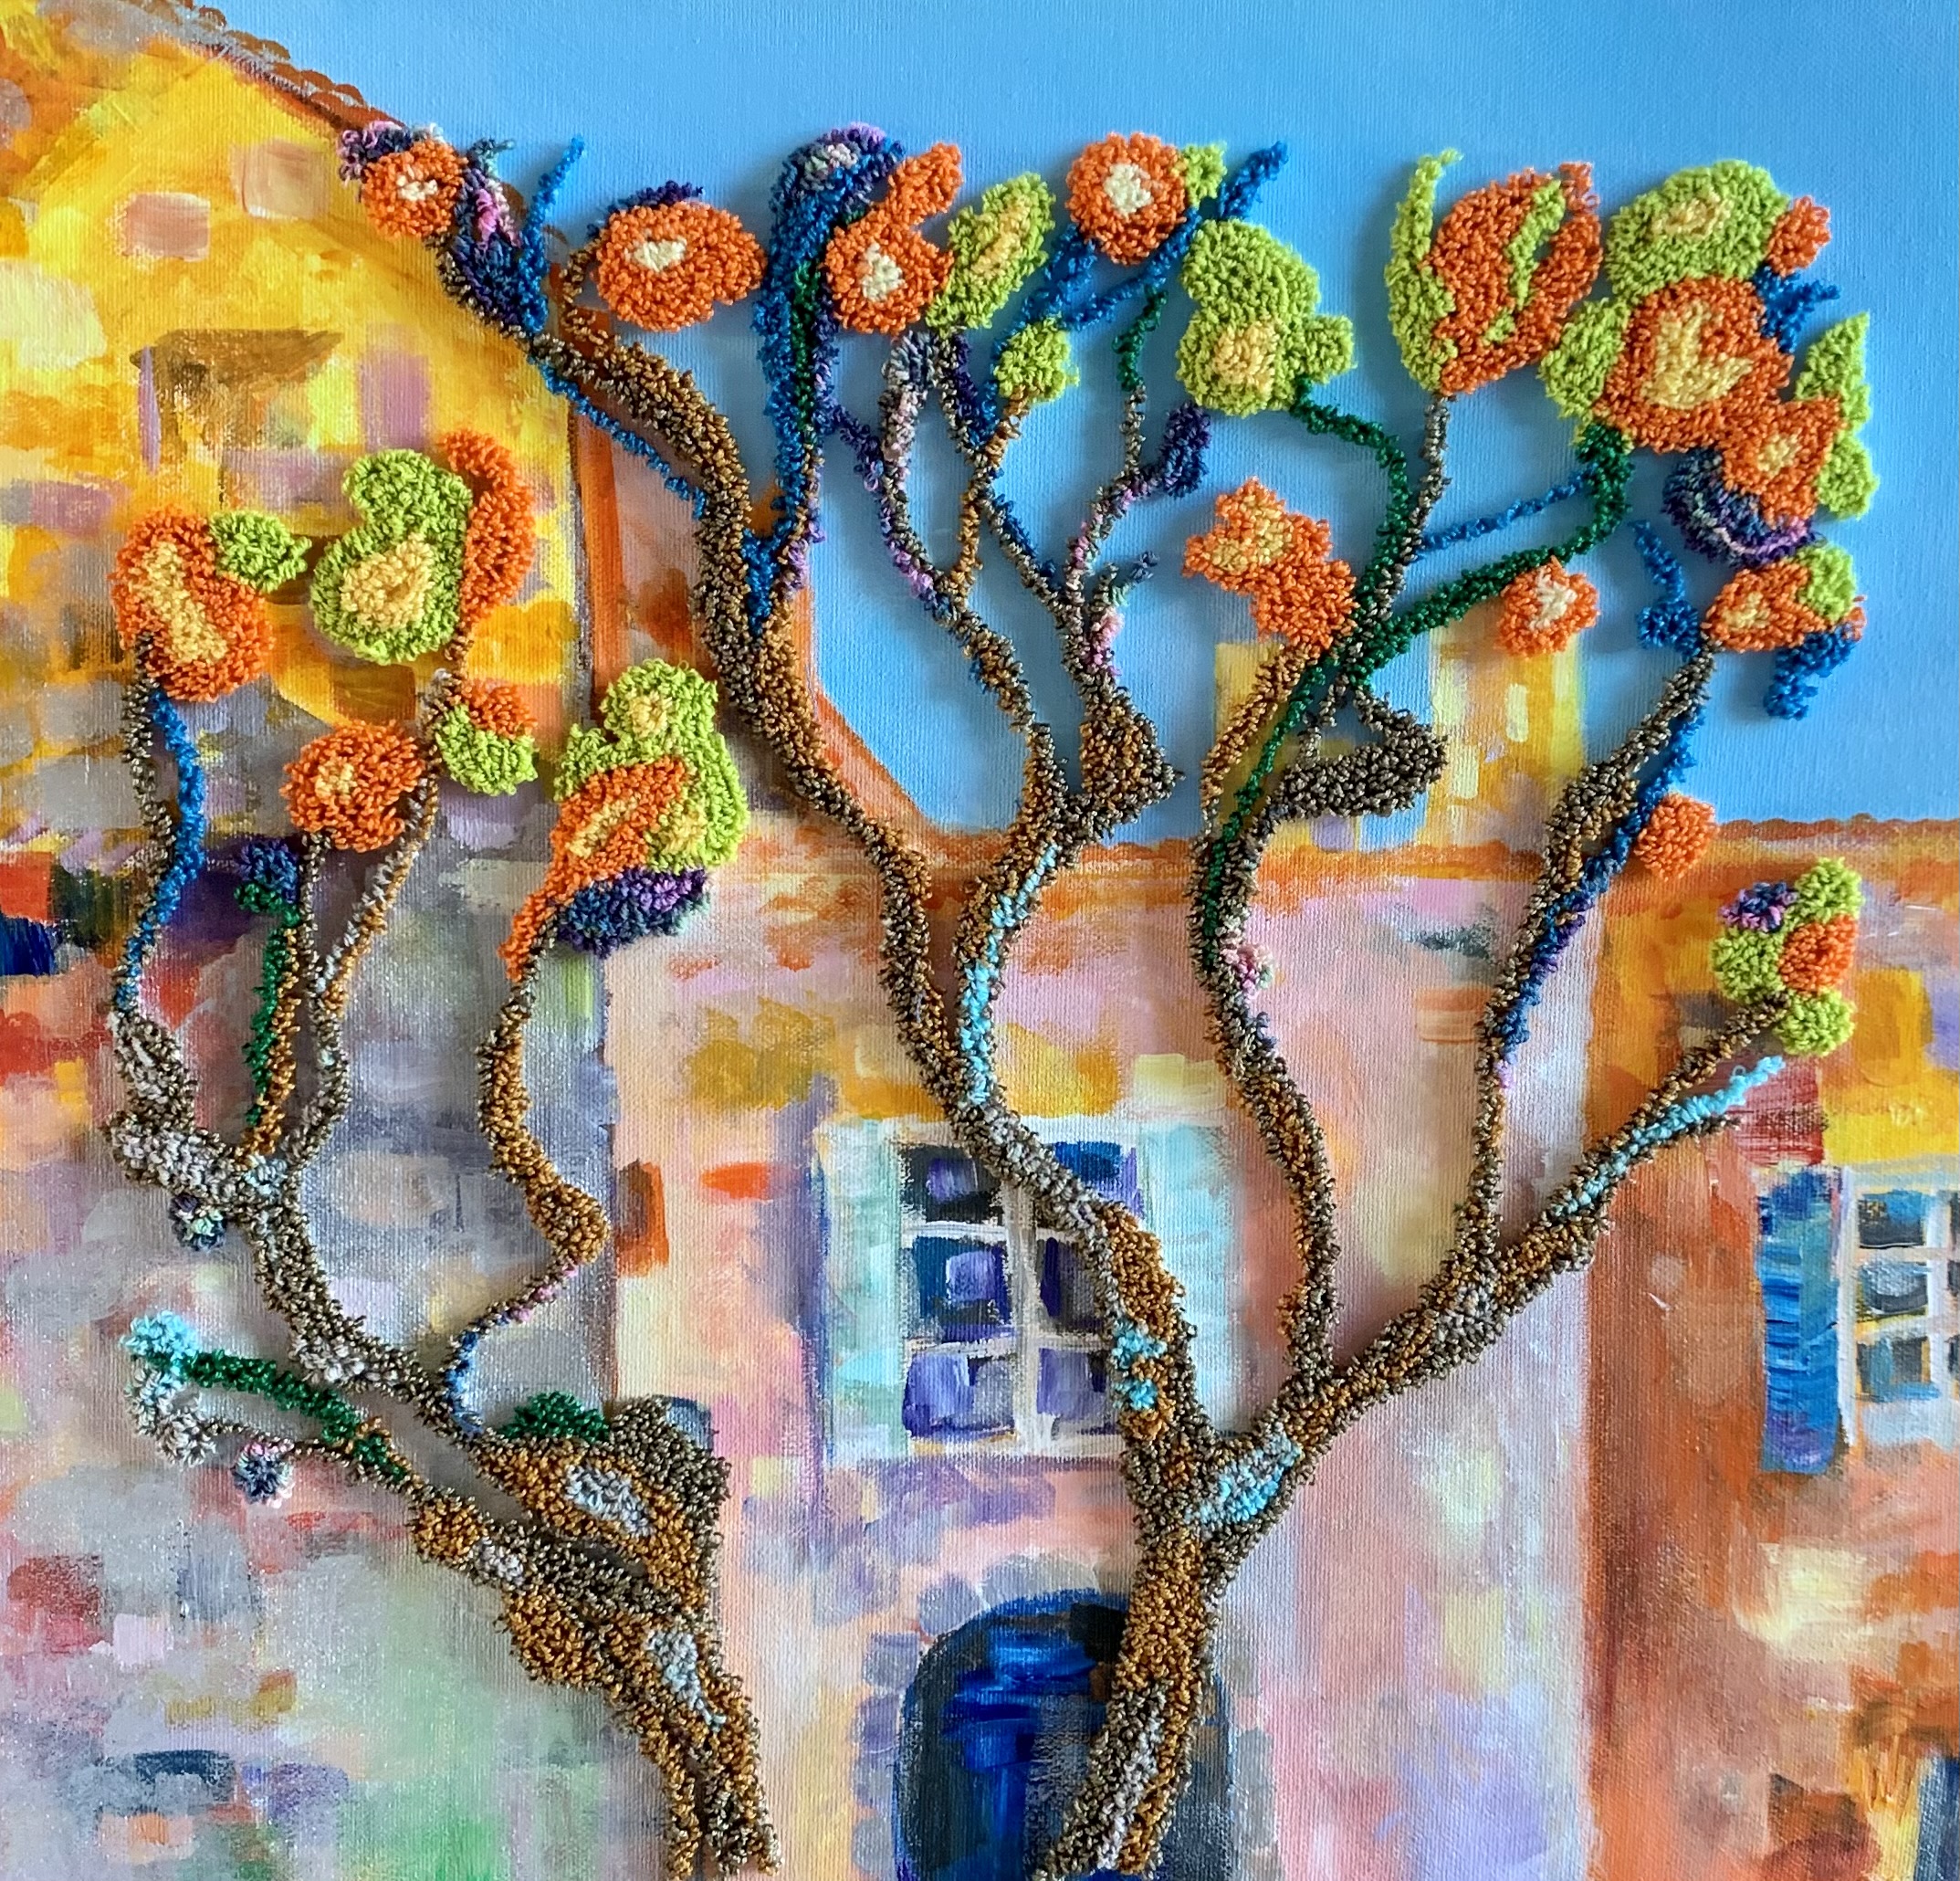 The fig tree of Saint-Tropez